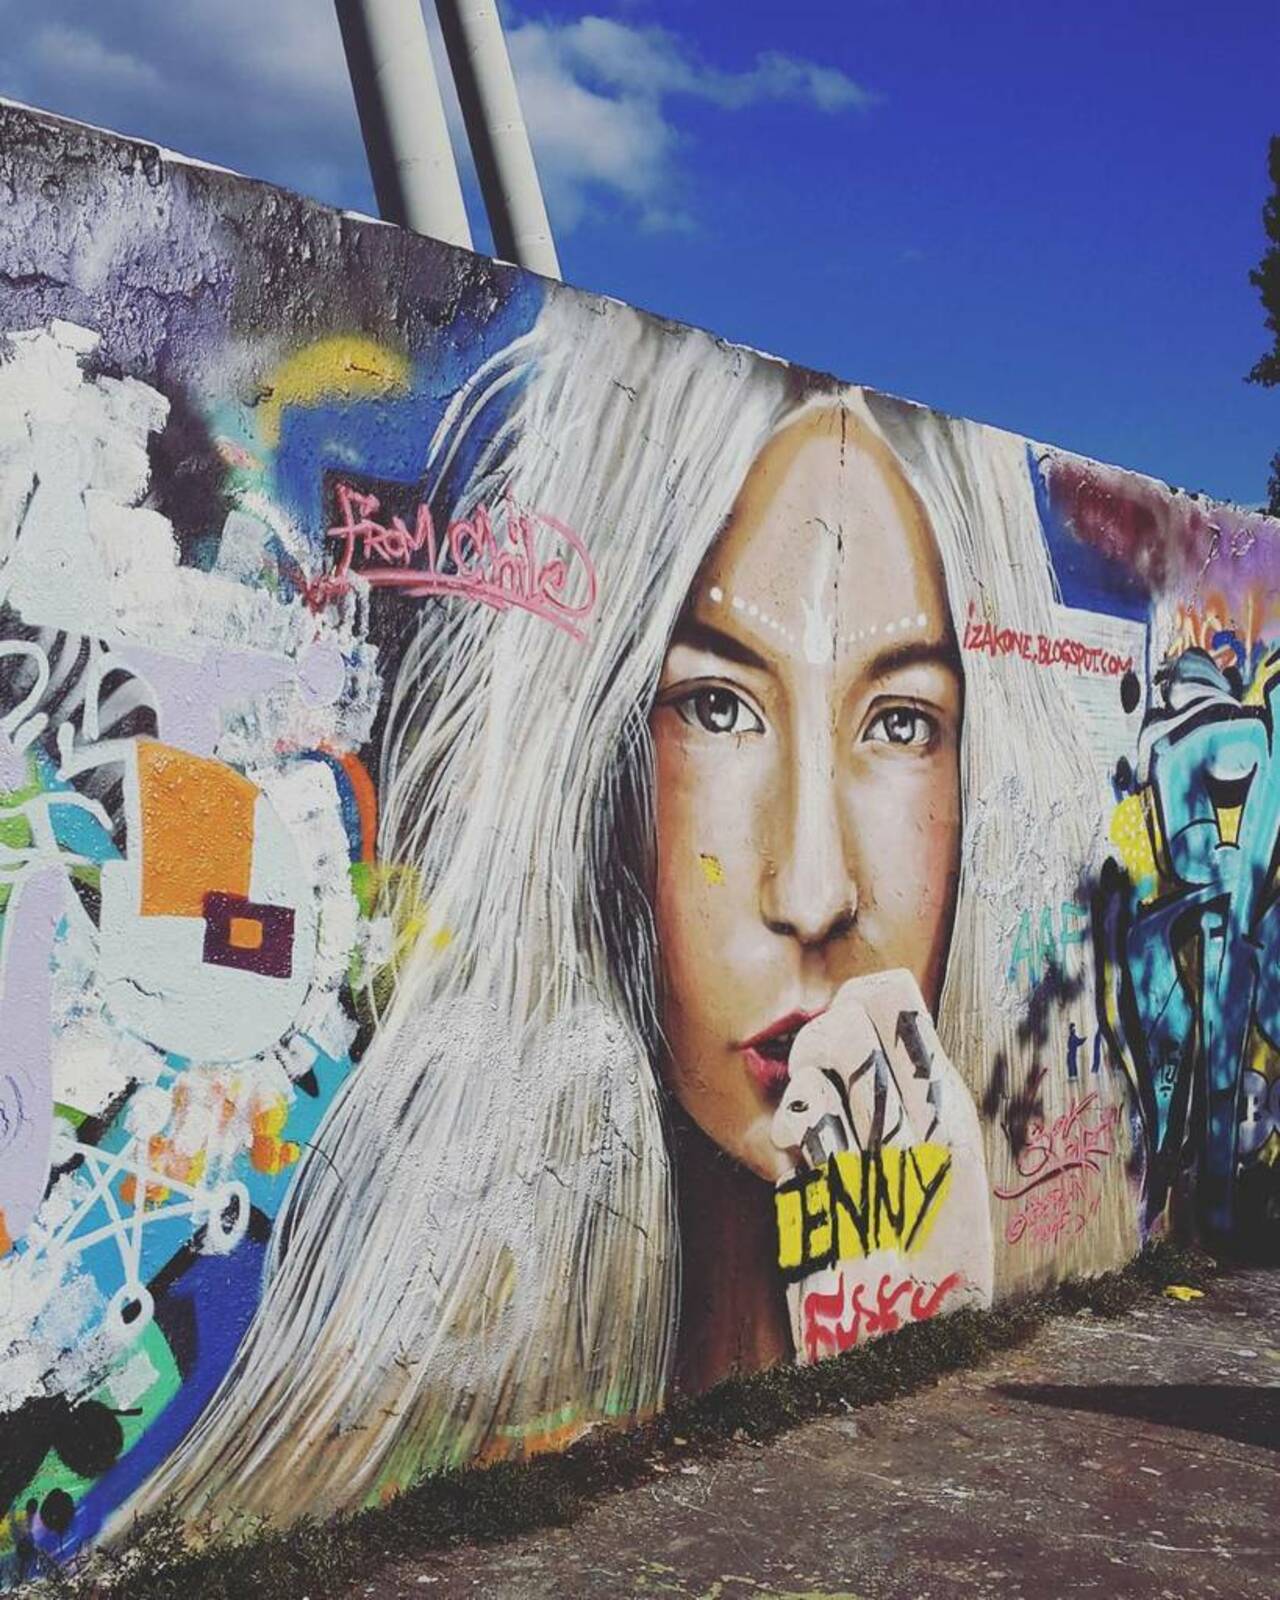 #awesome #streetart #graffiti #painting #mauerpark #berlin by so4dorian http://t.co/cVADdPpKfj